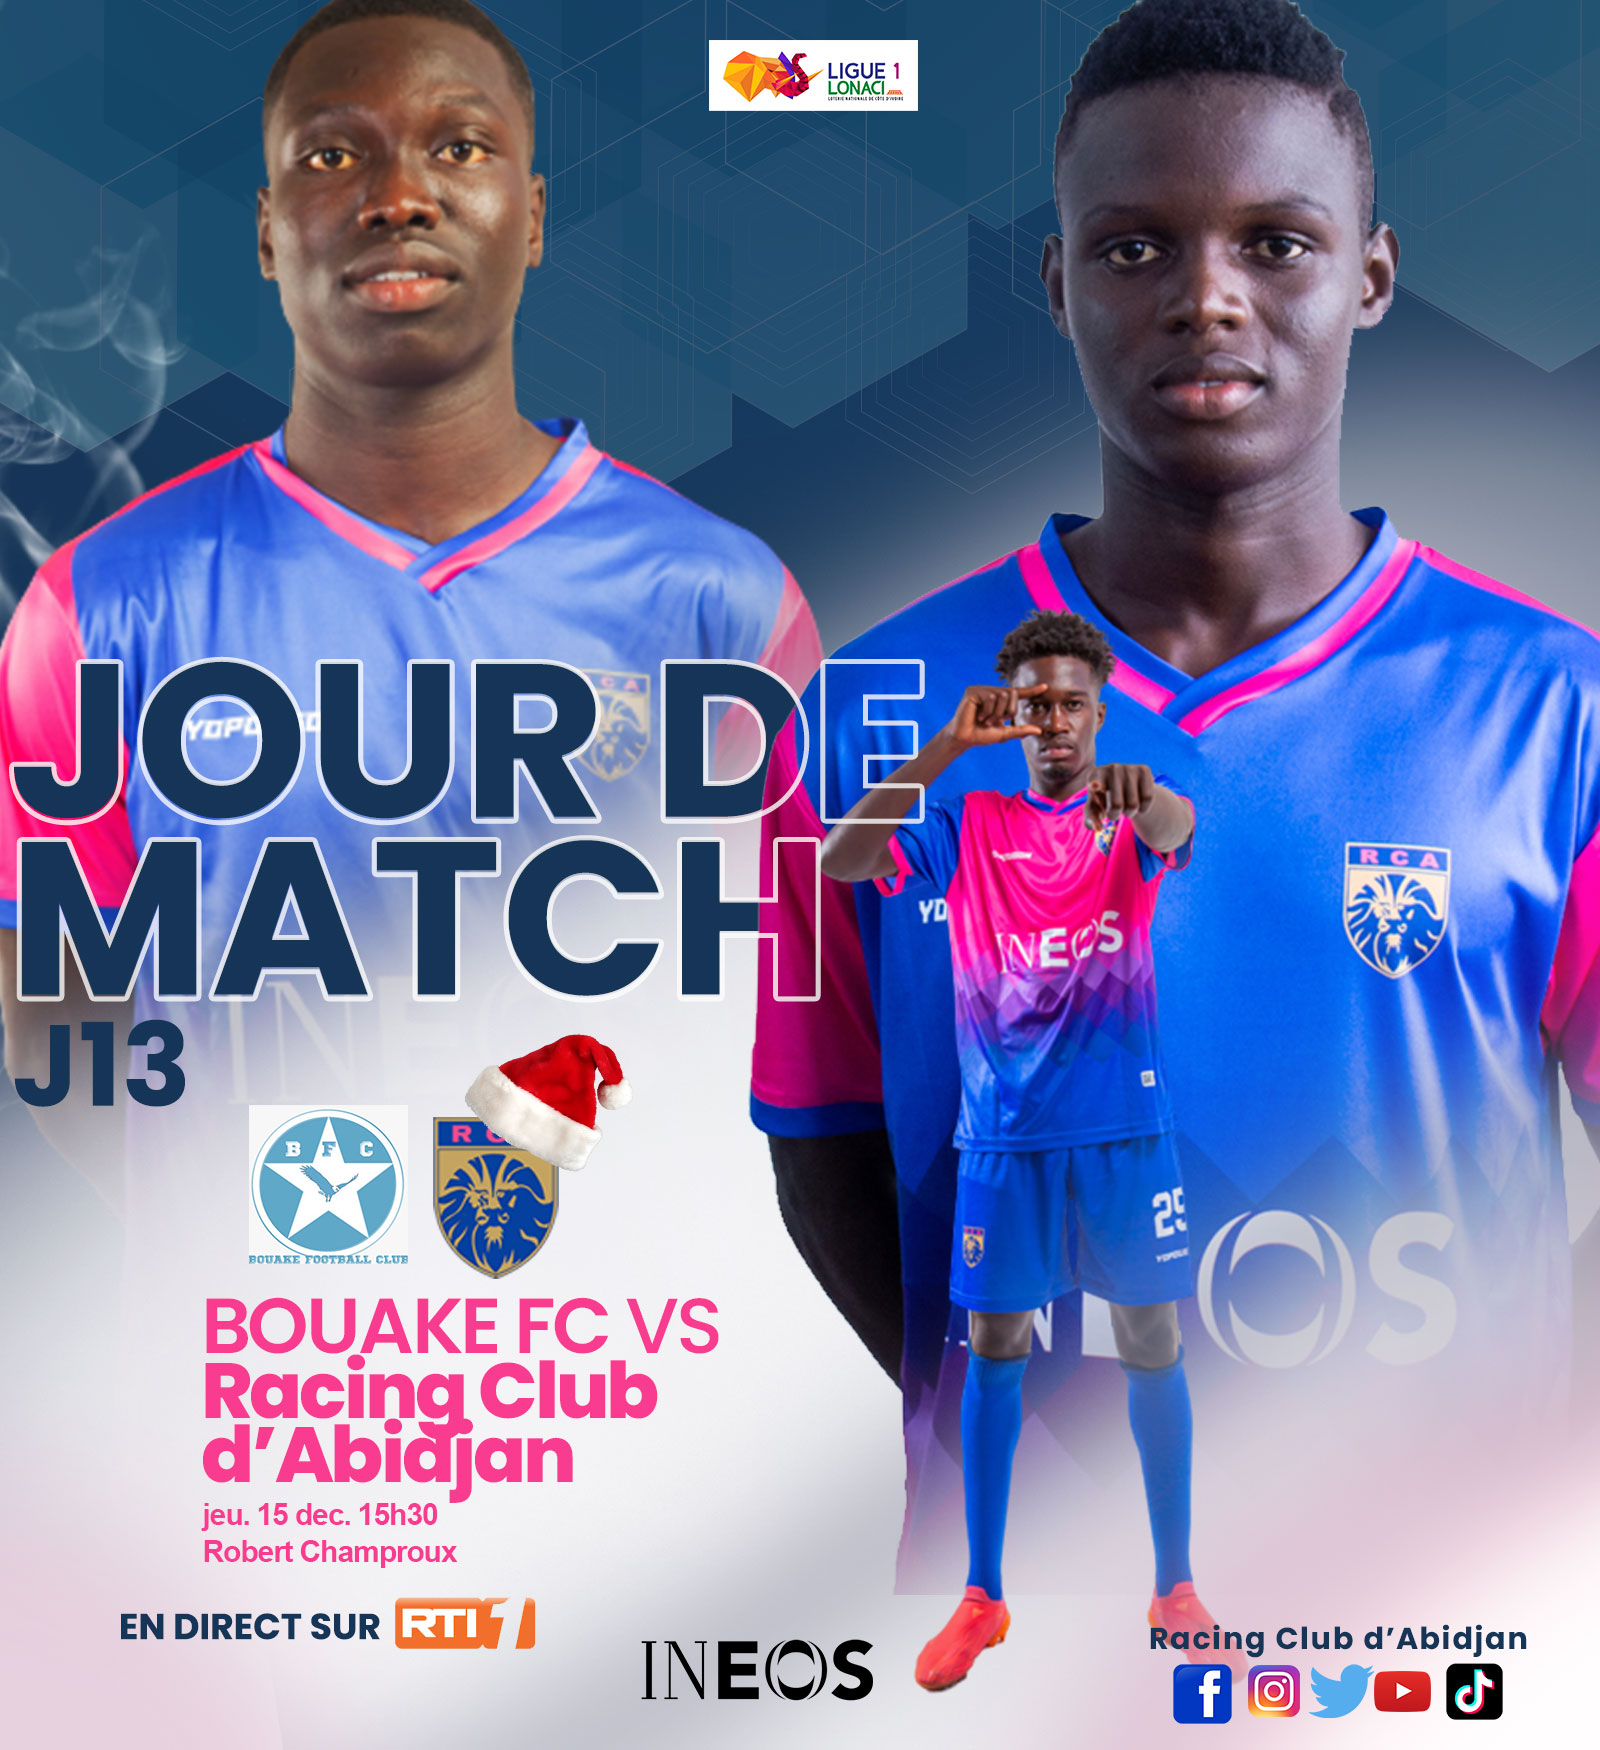 Racing Club Abidjan on X: Next match SOA vs Racing Club d'Abidjan 18 Sept.  15h30 - Stade Robert Champroux #SOARCA  / X